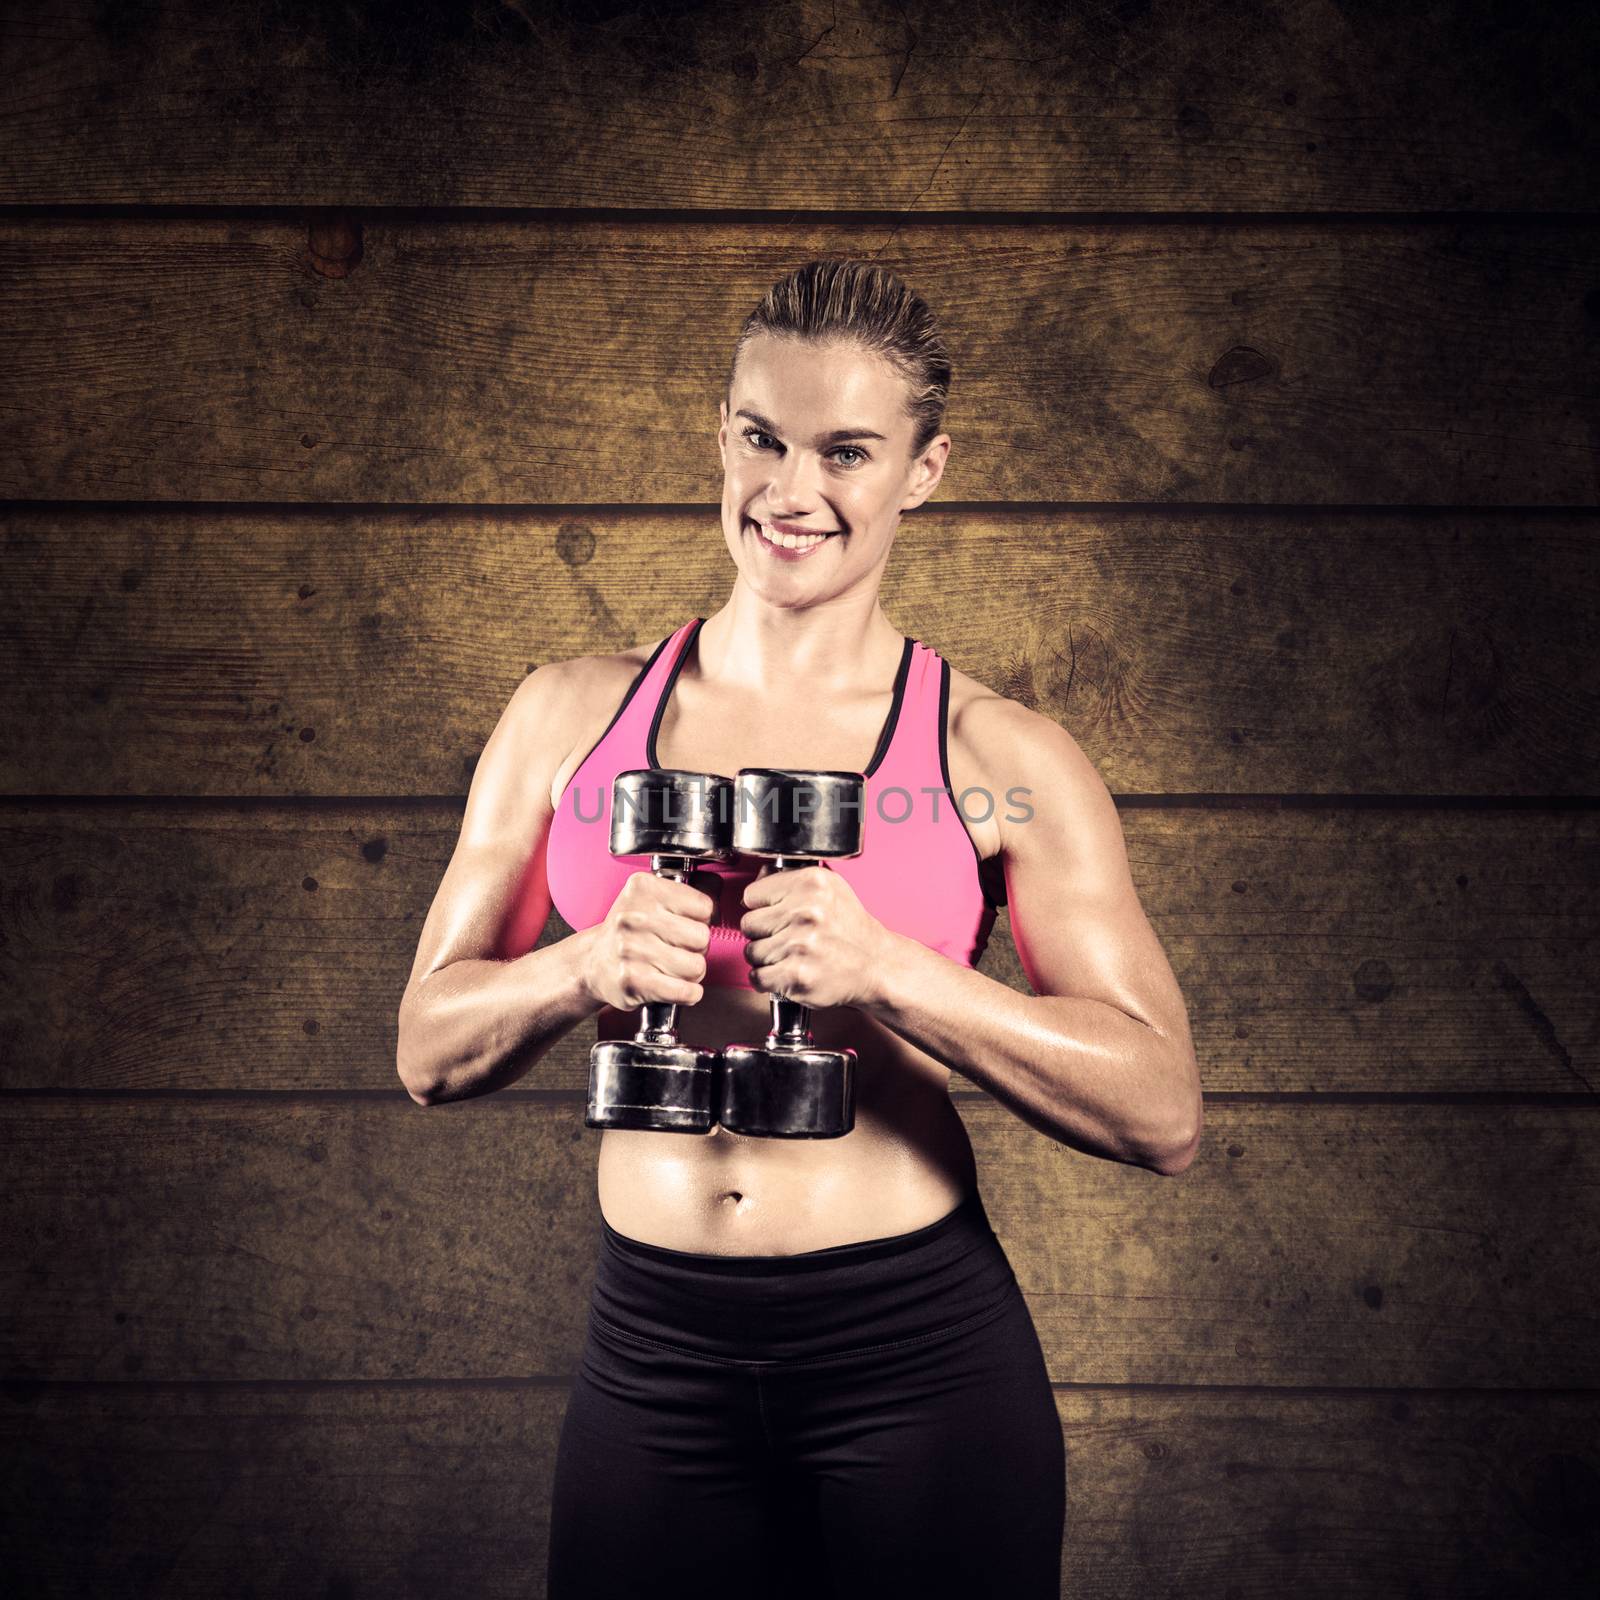 Muscular woman lifting heavy dumbbells against dark fence